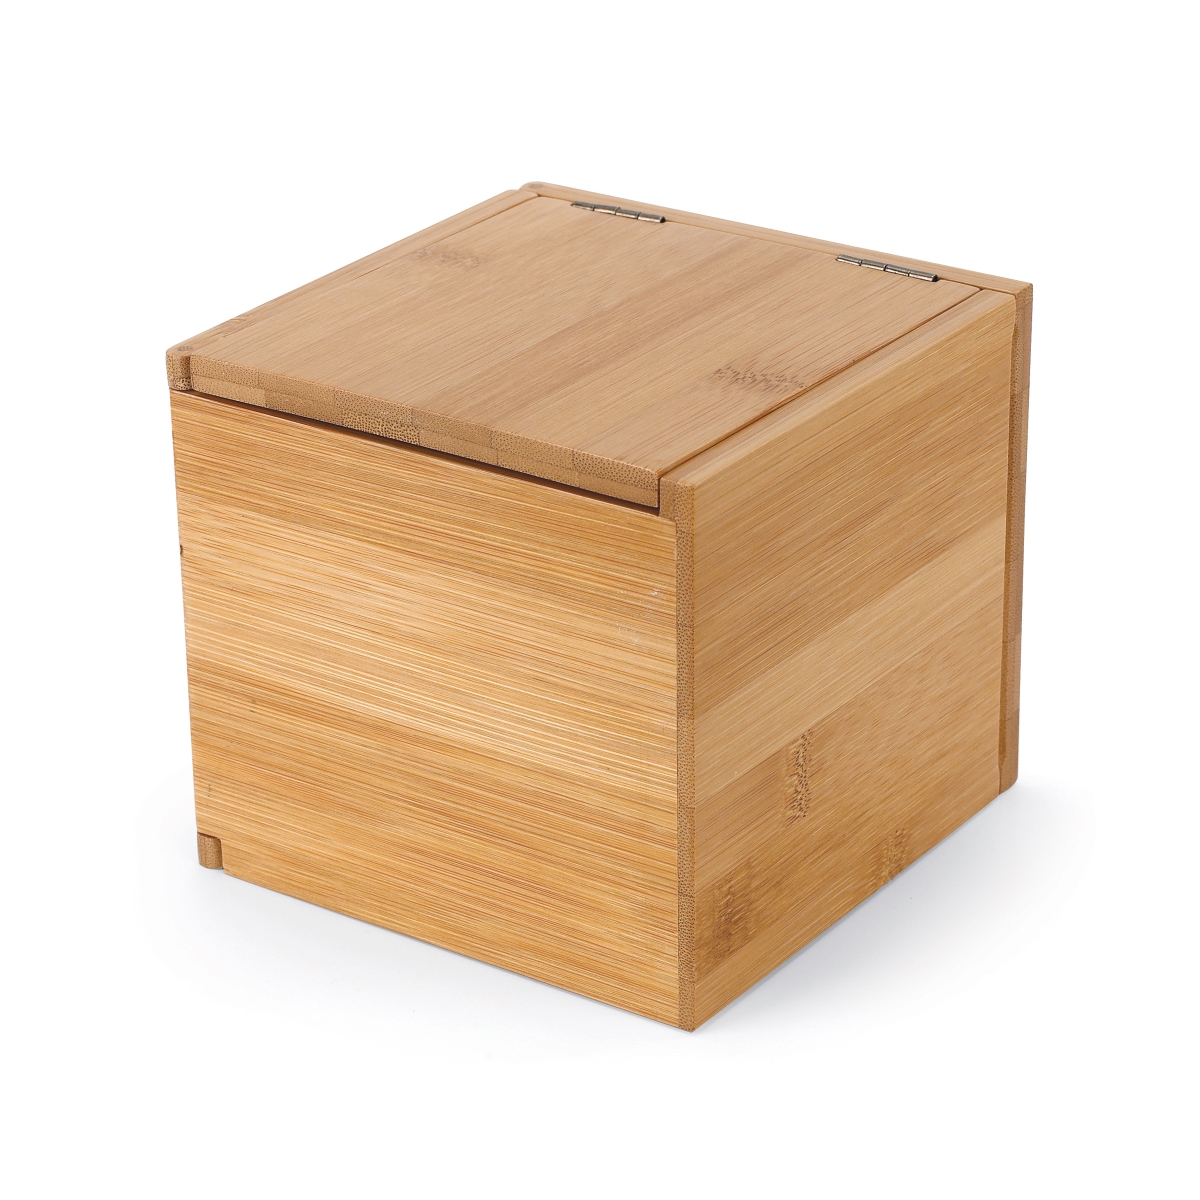 299100-390 Tuck Jewelry Storage Box Eco-friendly - Natural